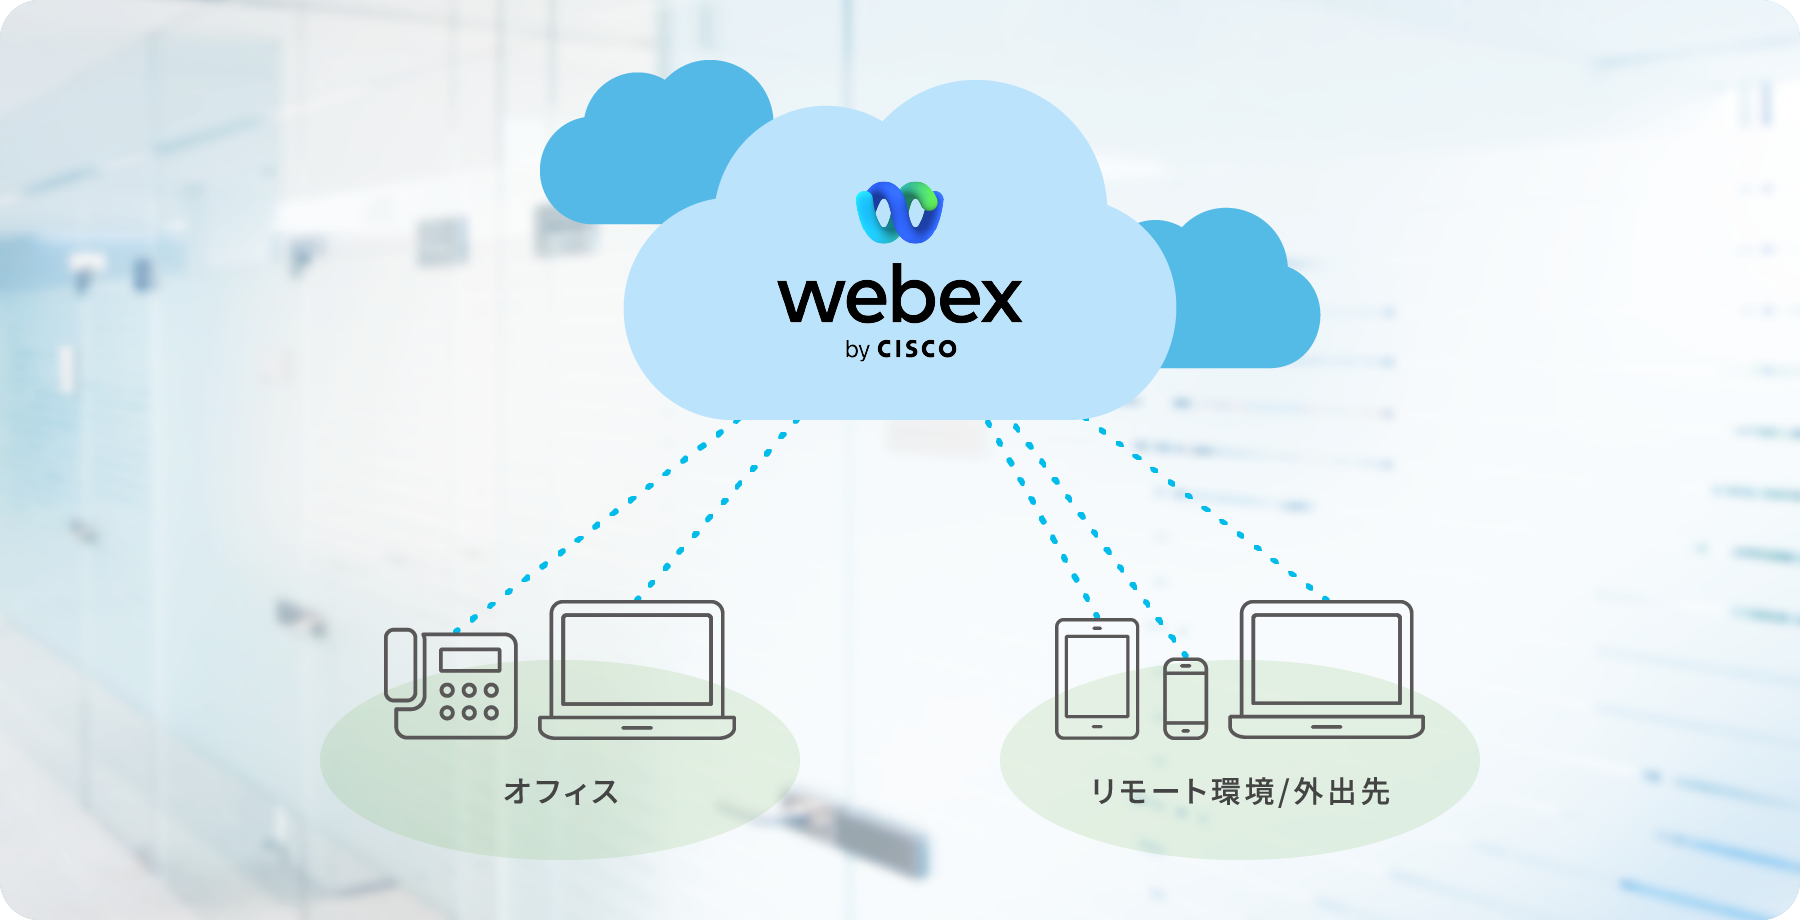 Webex Calling by Cisco、設備の設置を必要としない、クラウド型電話システム。オフィスからもリモート環境、外出先からも。